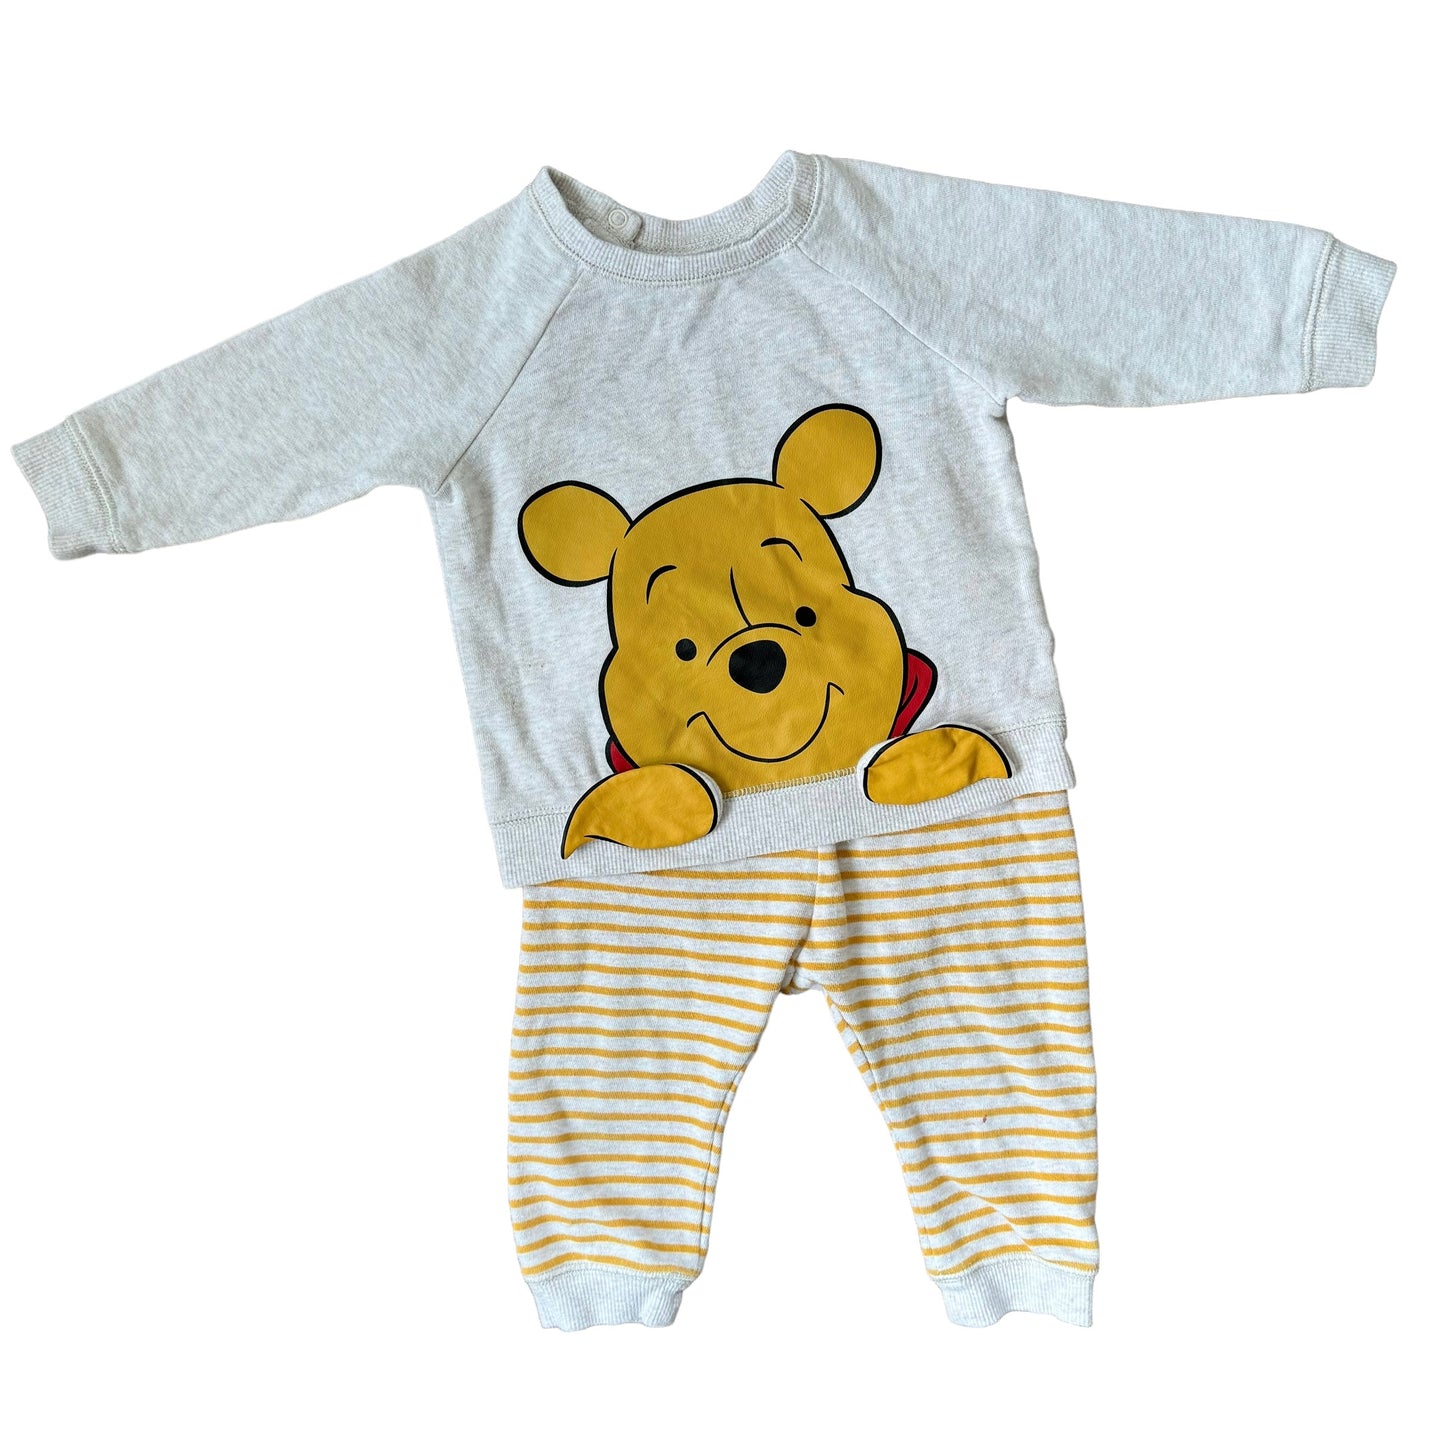 H&M Winnie the Pooh Set | Size: 1 year | EUC